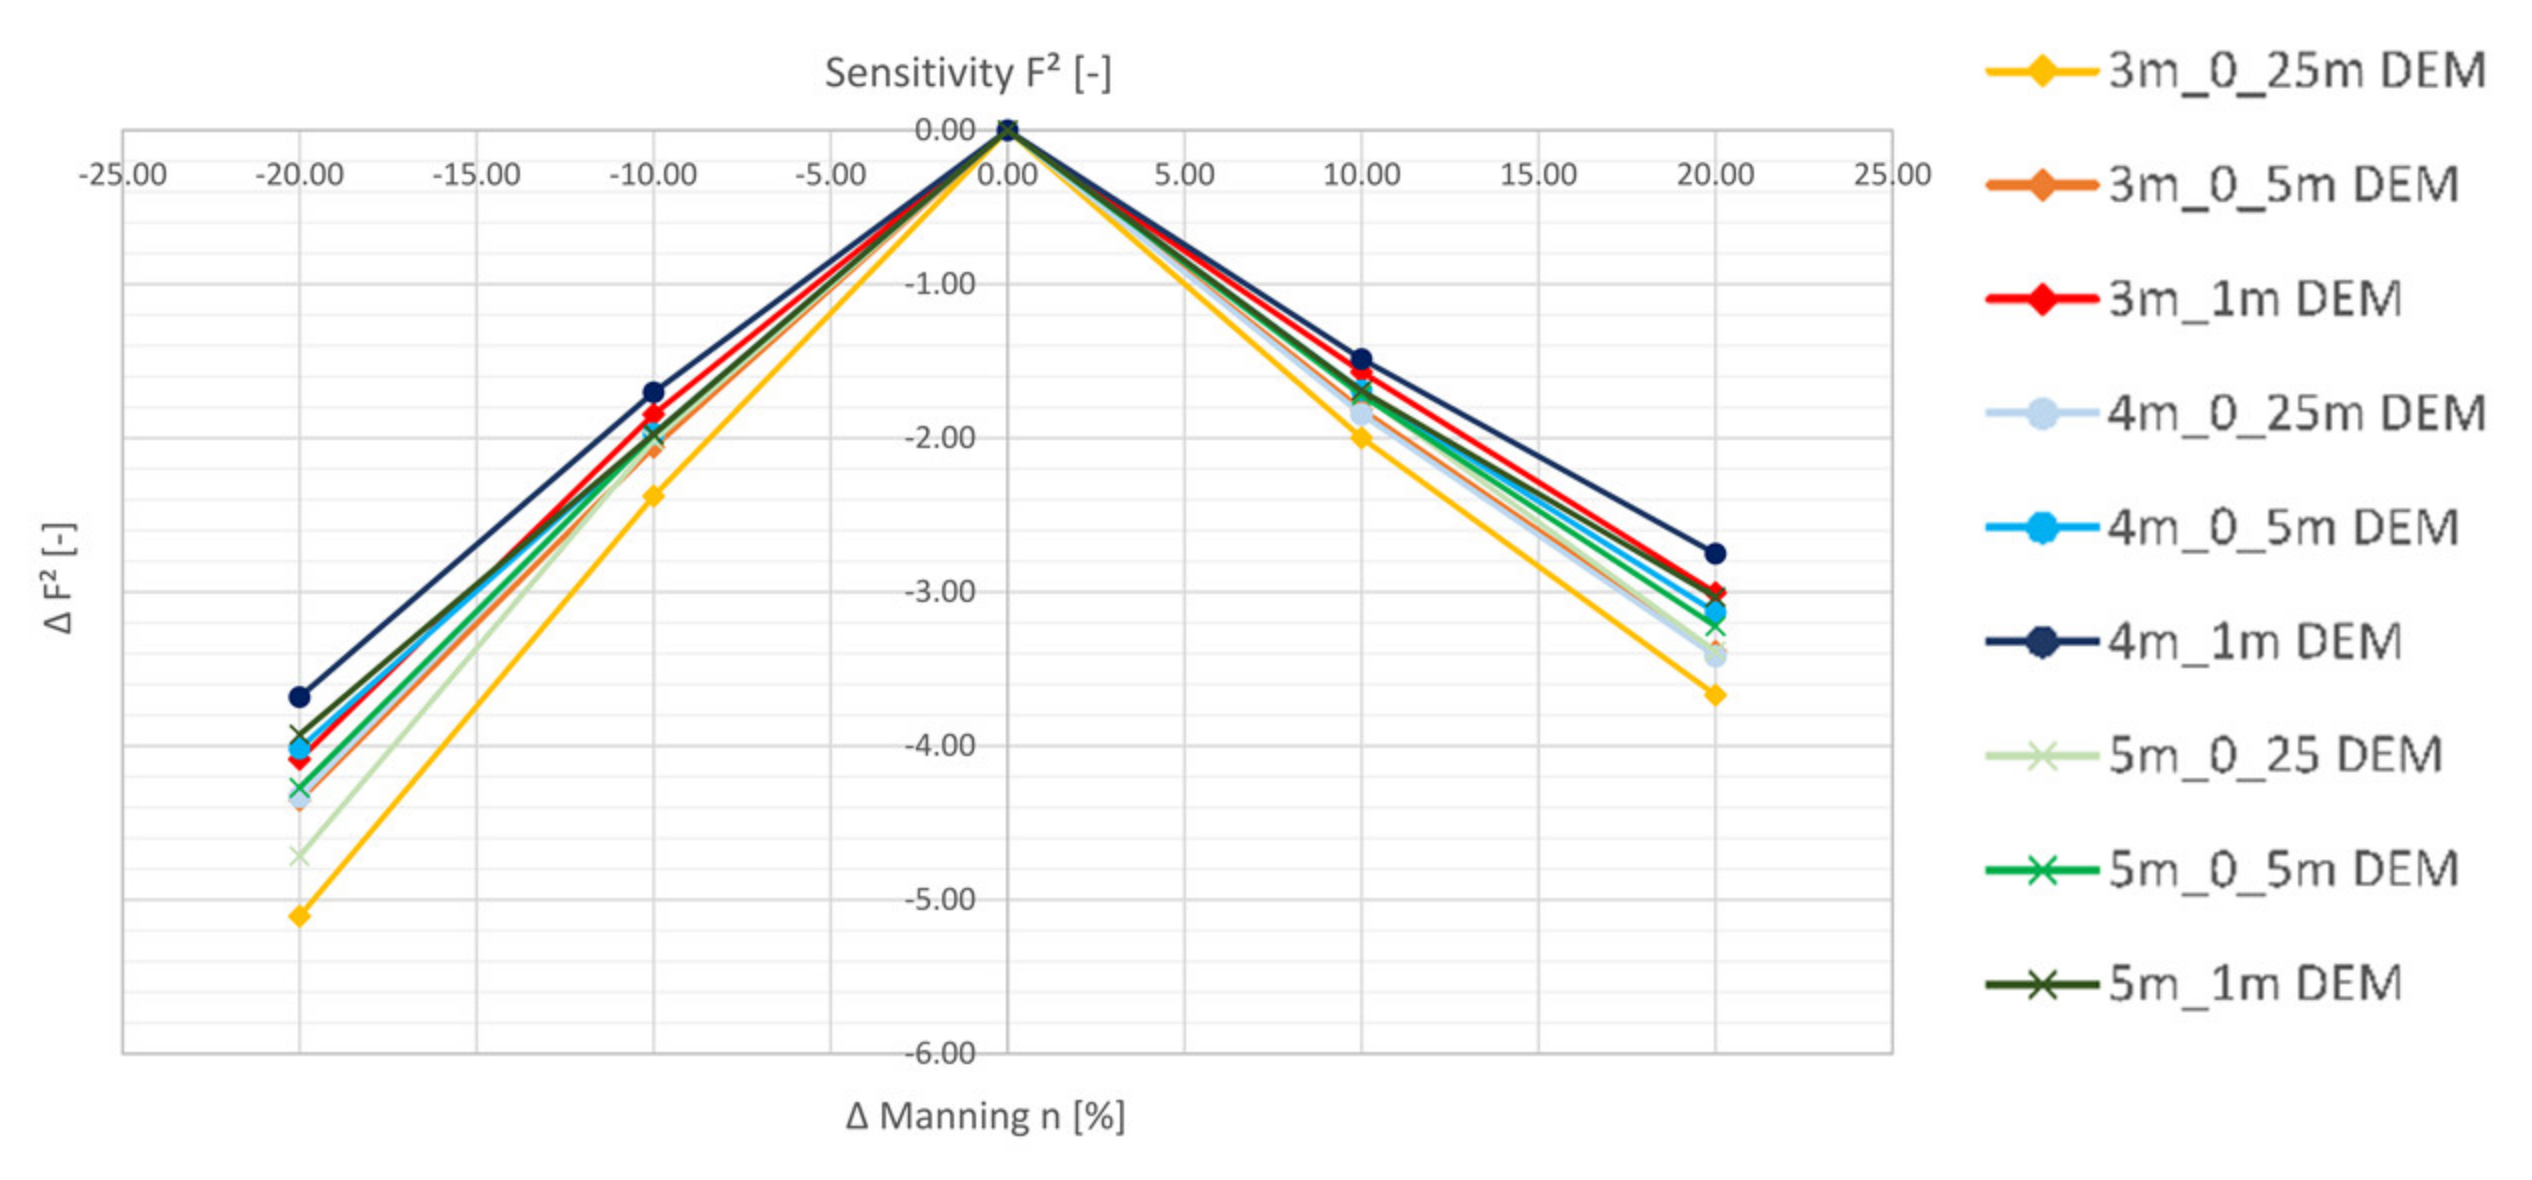 hec ras sensitivity analysis of mannings value